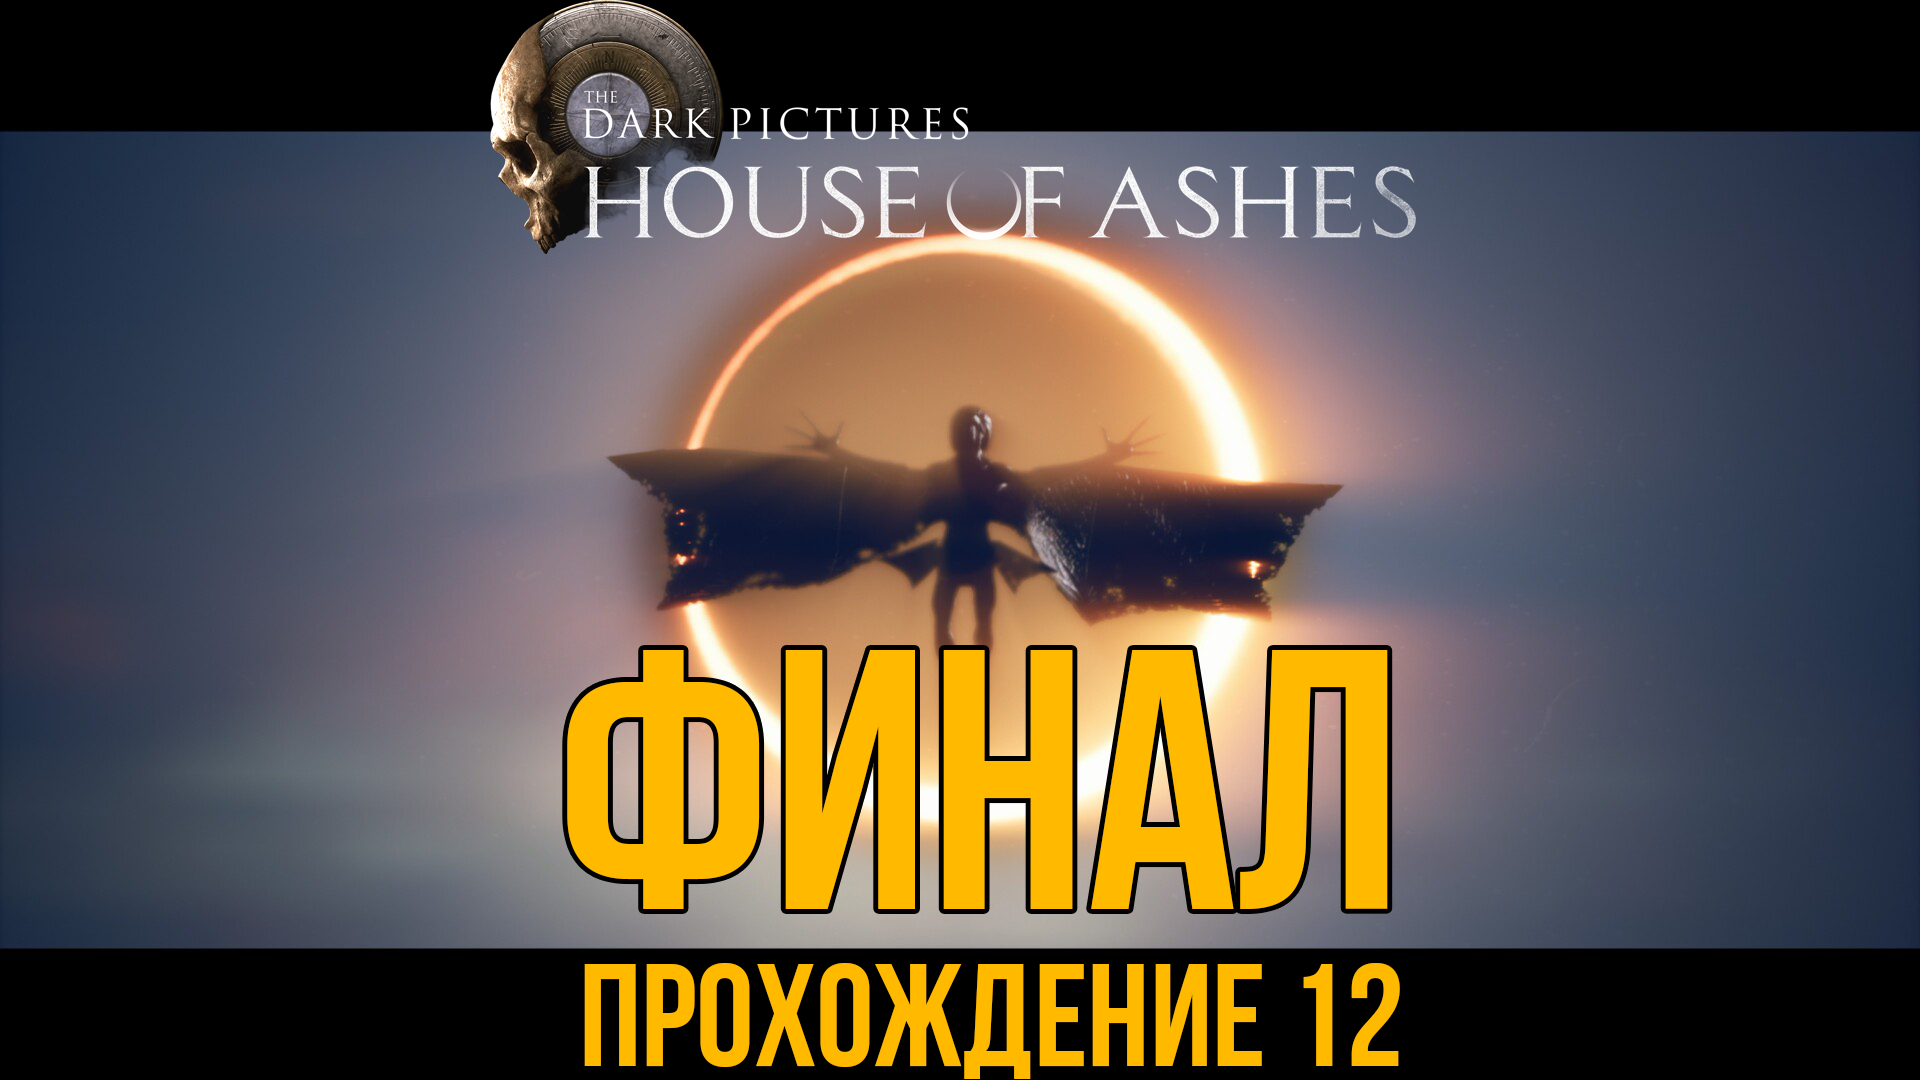 House of Ashes – Финал. Прохождение 12